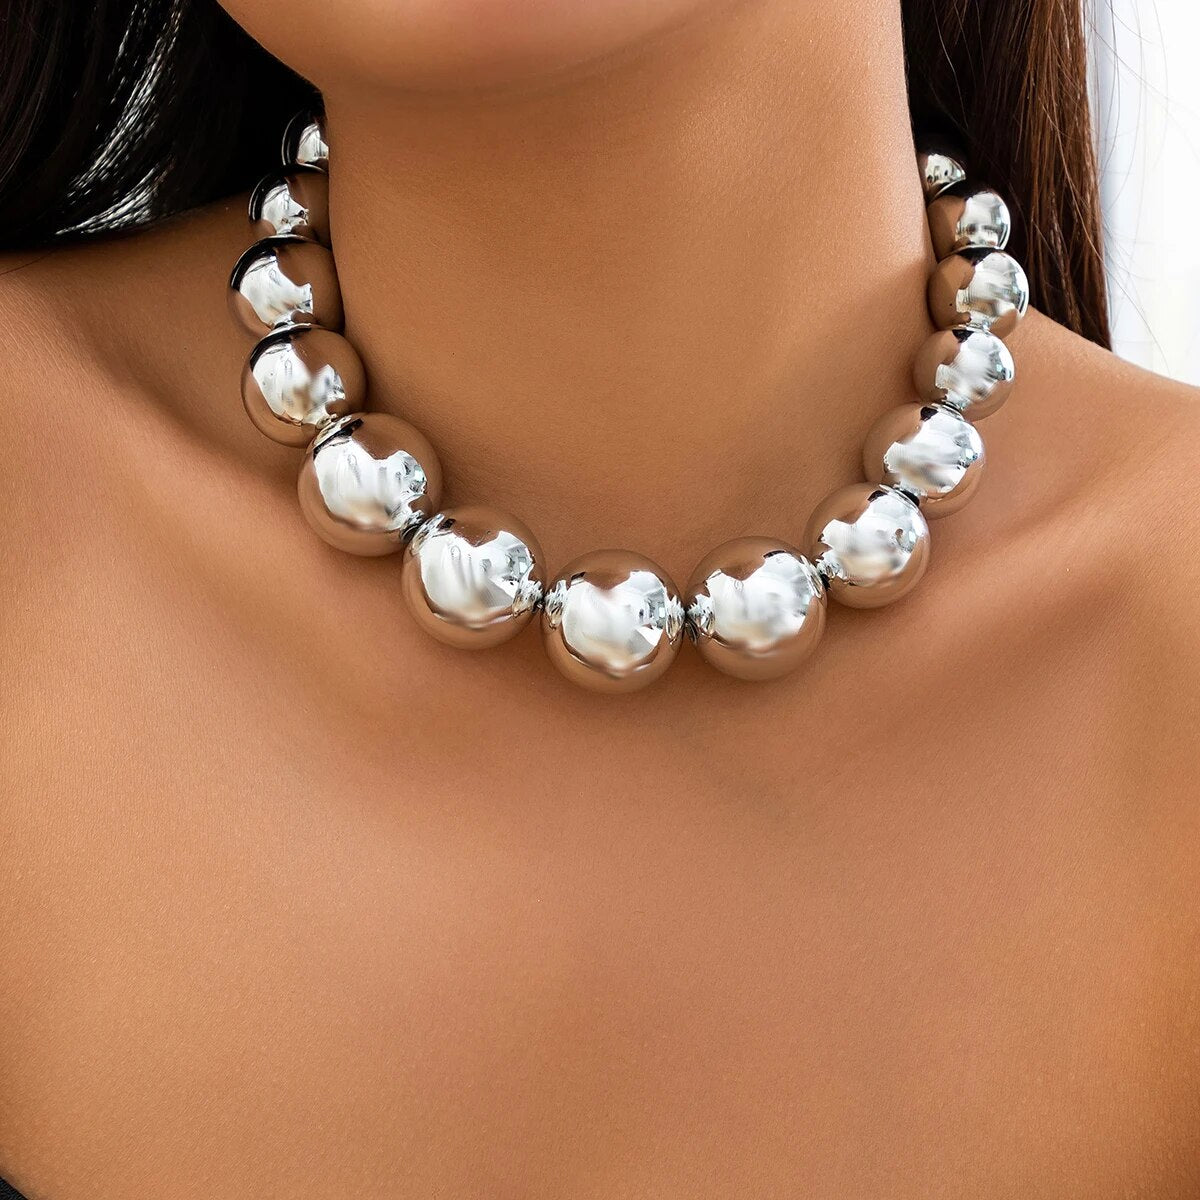 Sue Big Ball Bead Chain Necklace